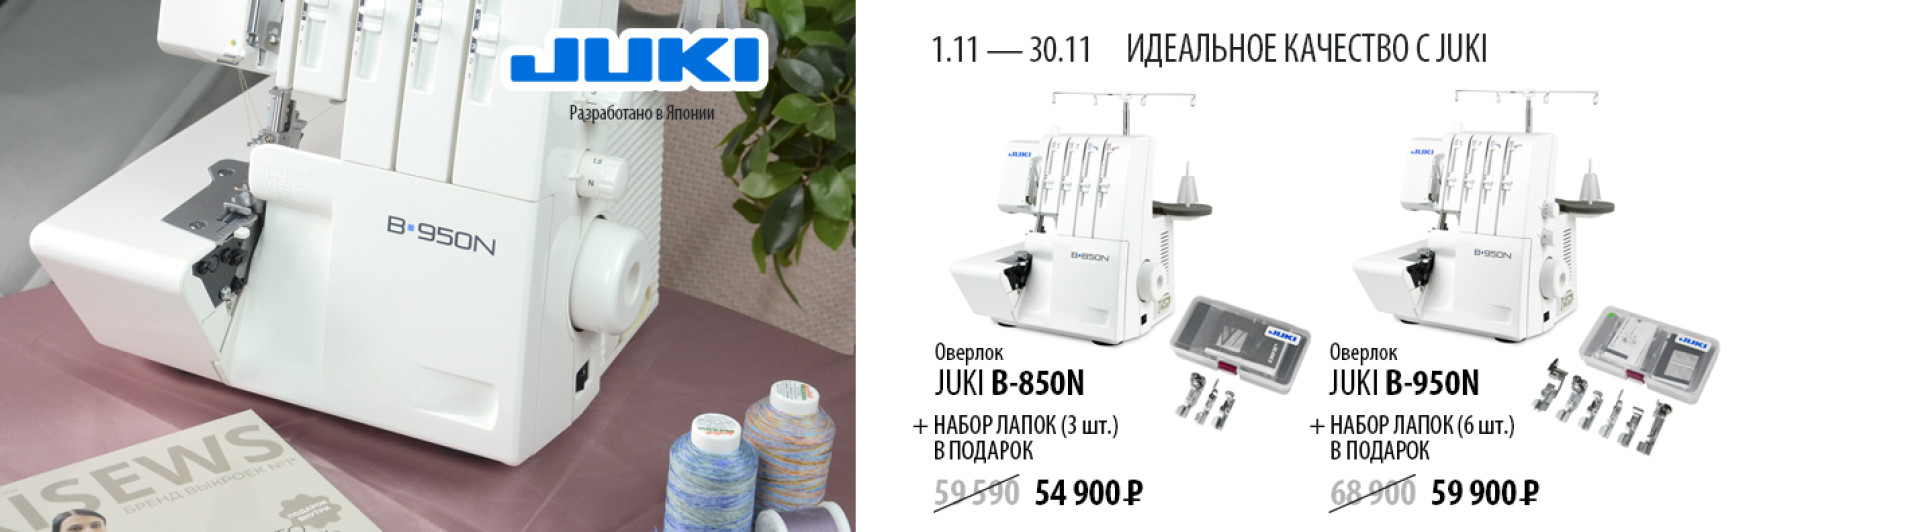 С 1 по 30 ноября скидки на швейную технику JUKI